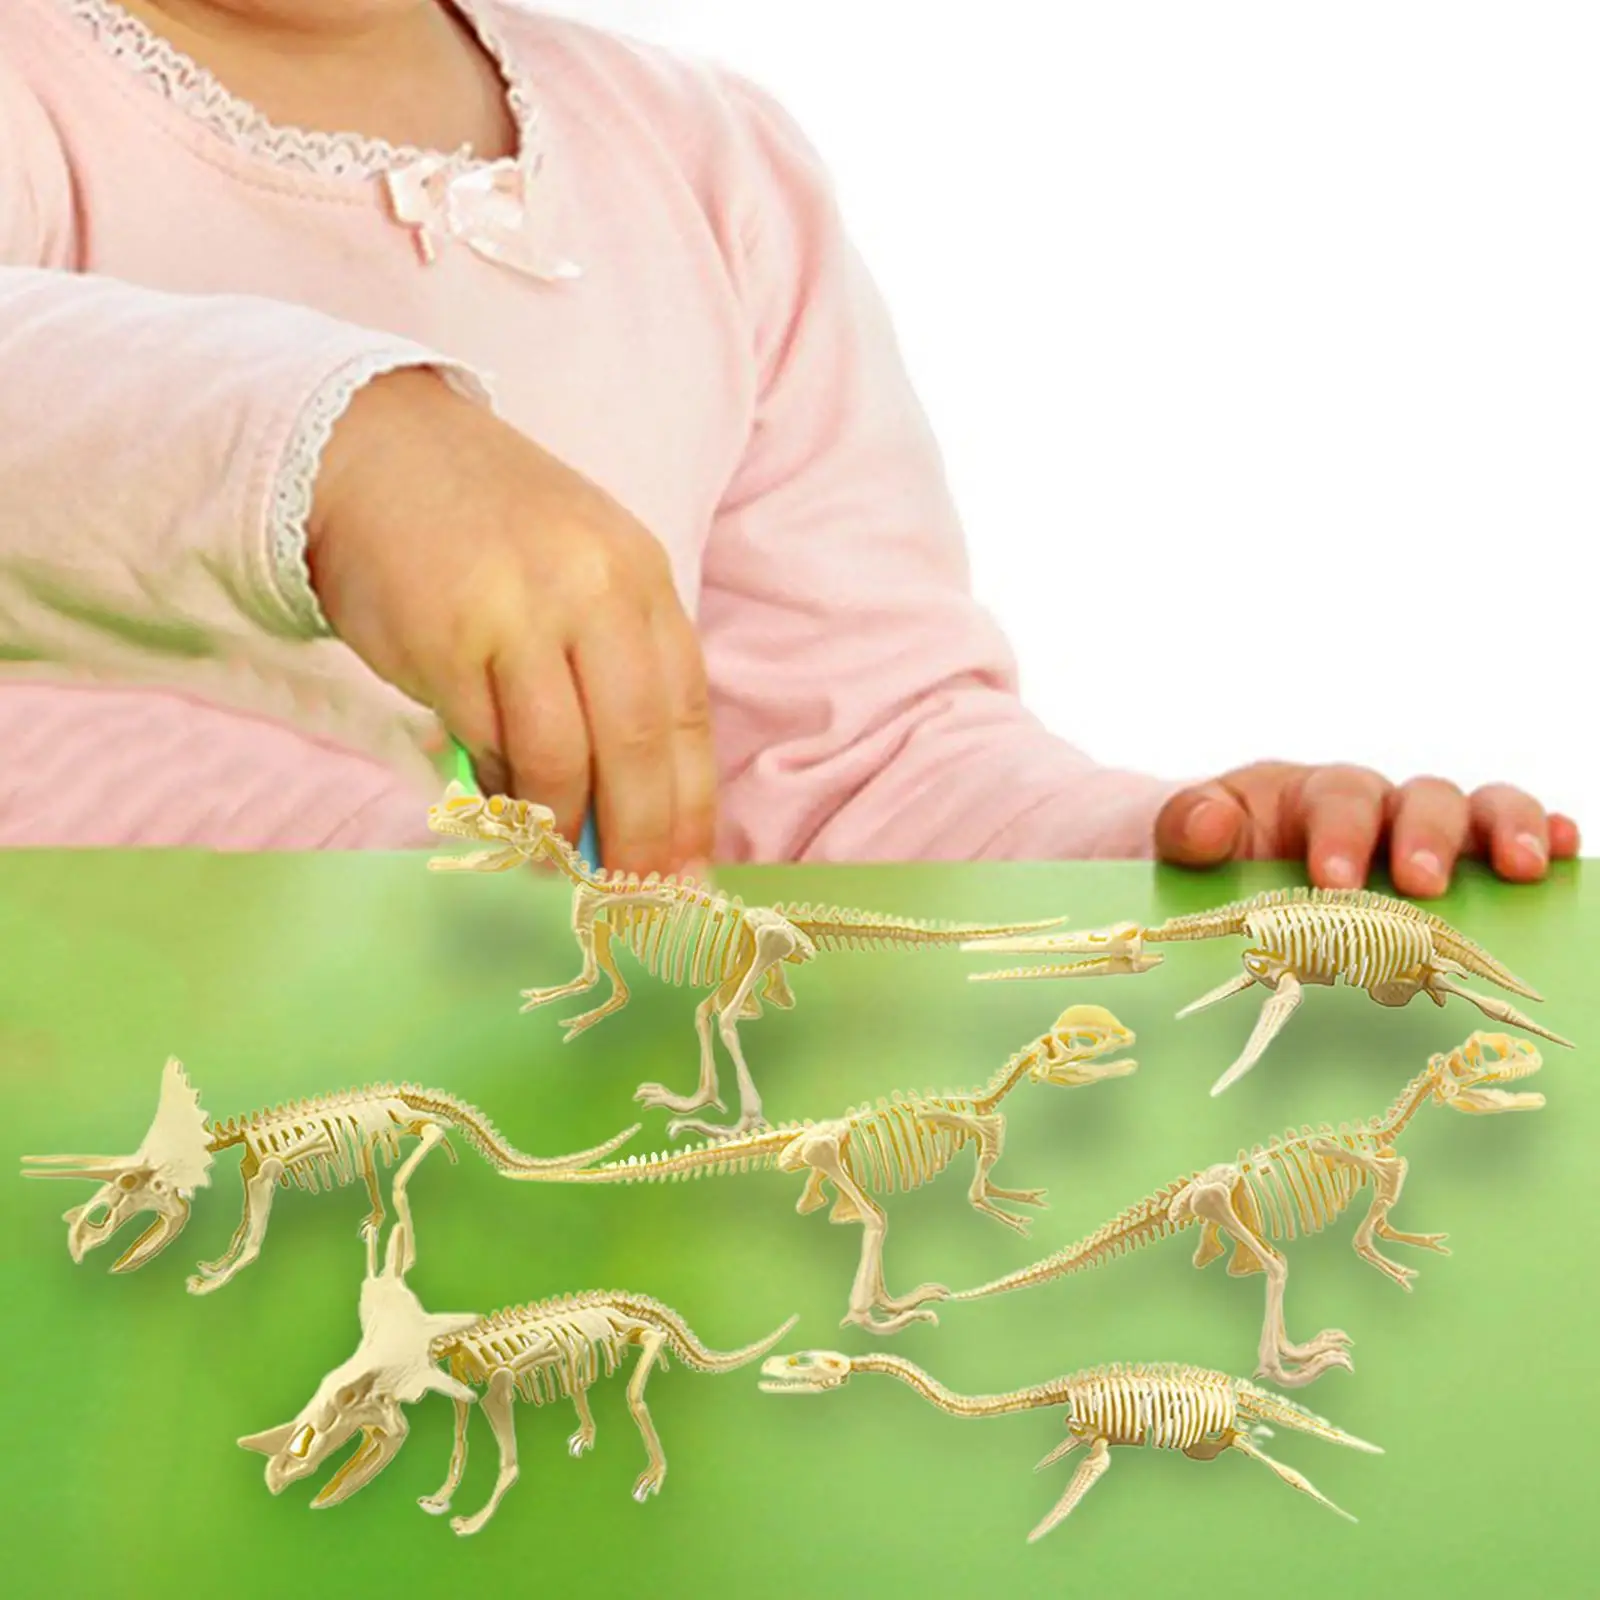 7Pcs Dinosaur Skeleton Models Figurines for Birthday Collection for Kids